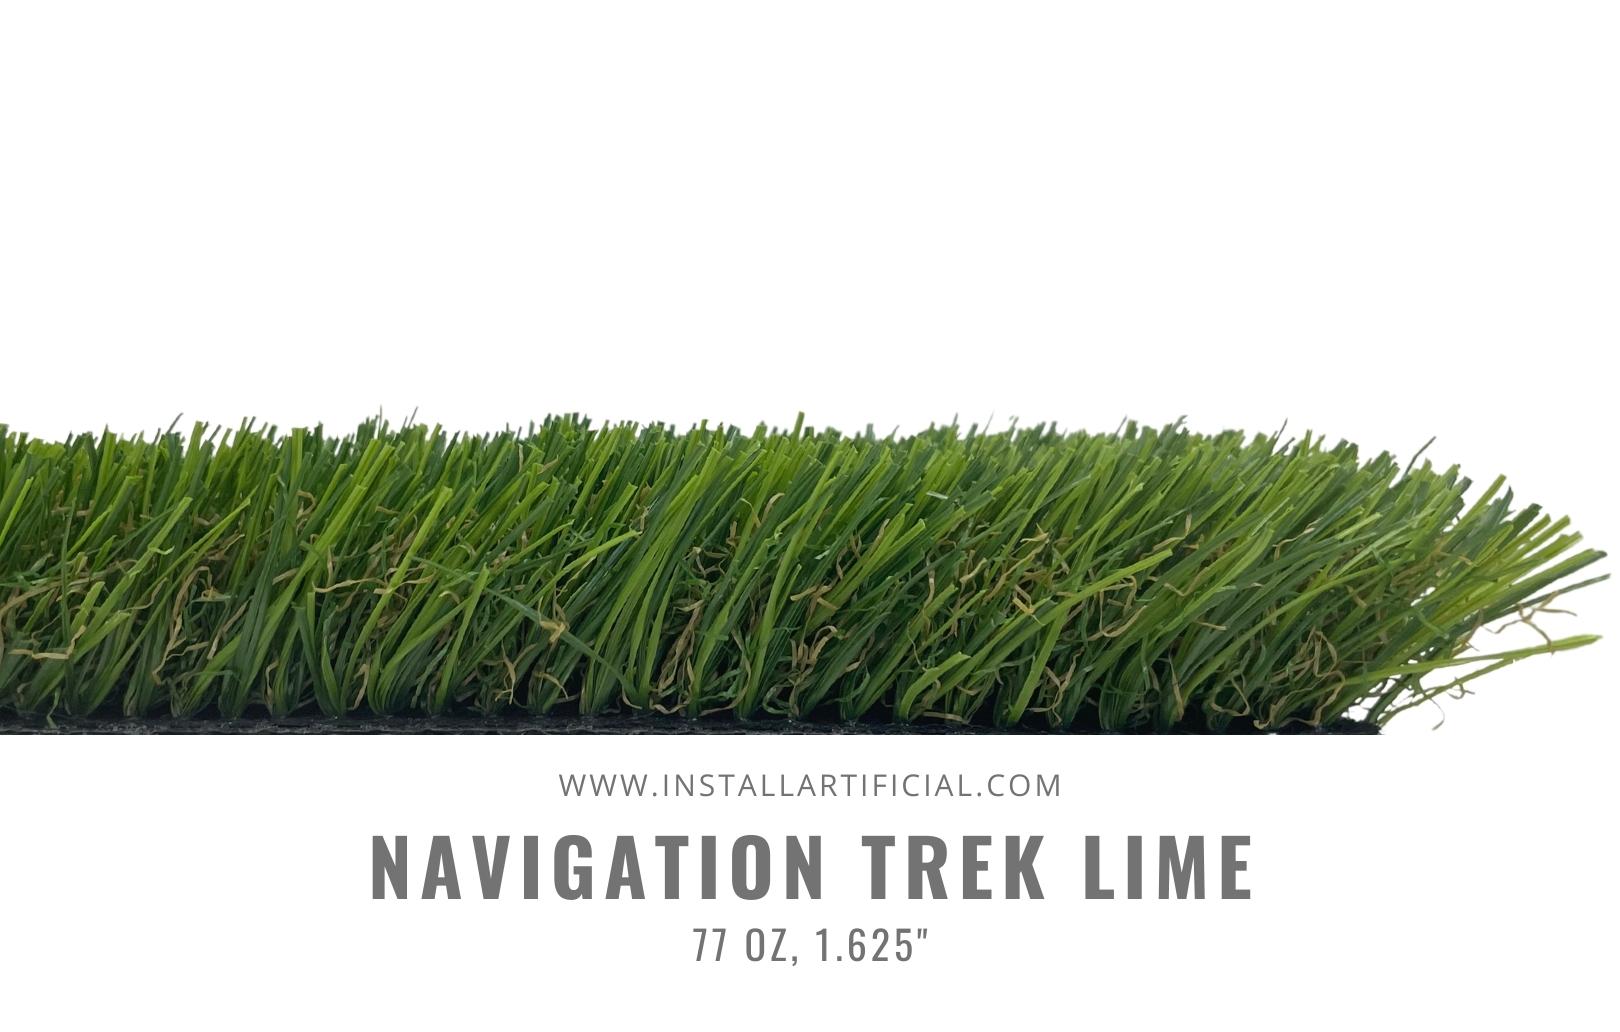 Navigation Trek Lime, Shawgrass, side